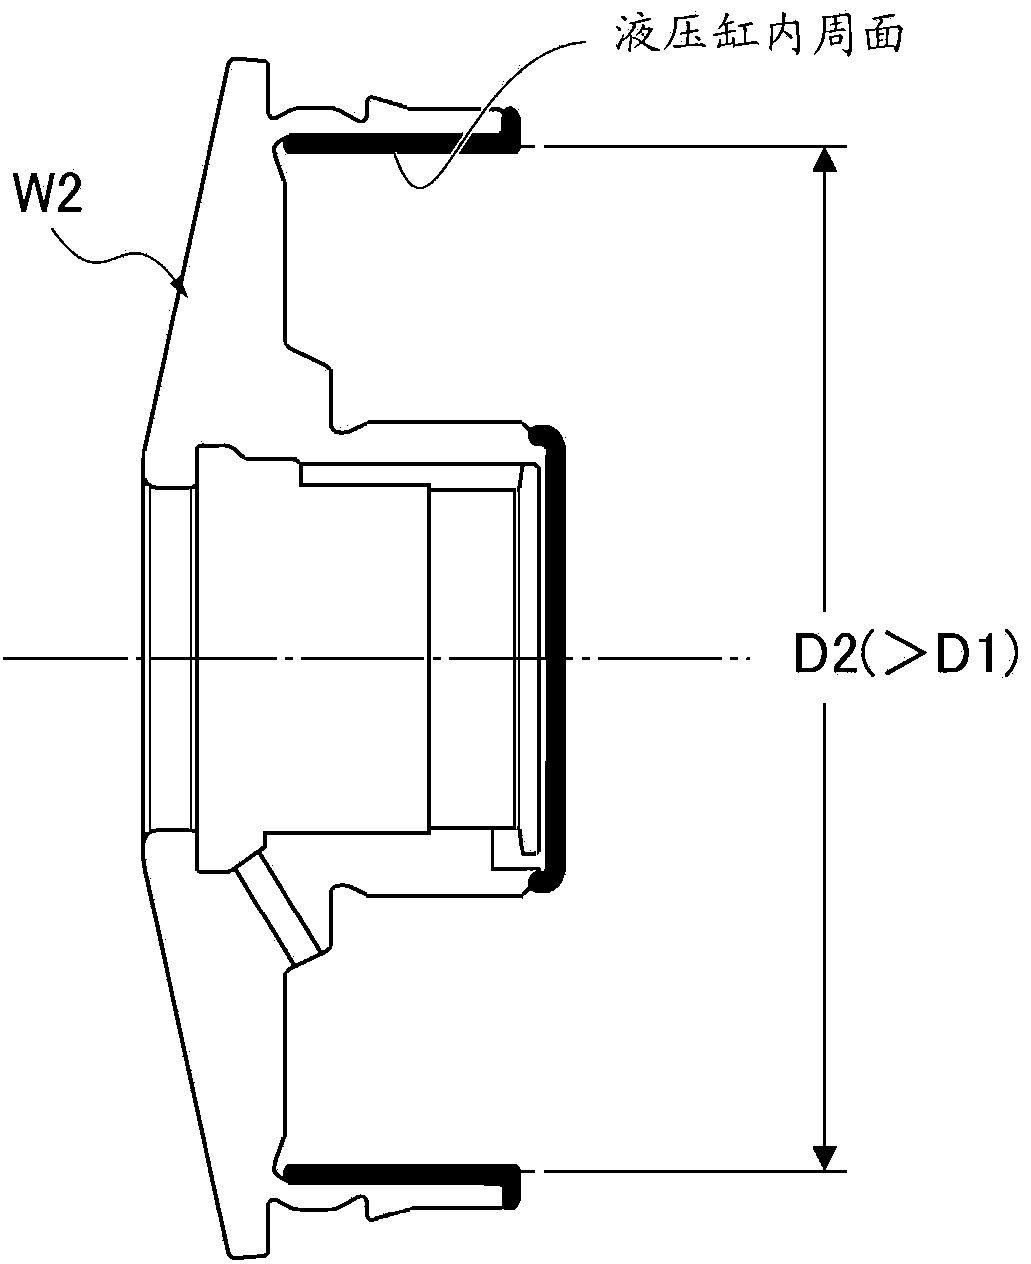 Manufacturing method of hydraulic brake device